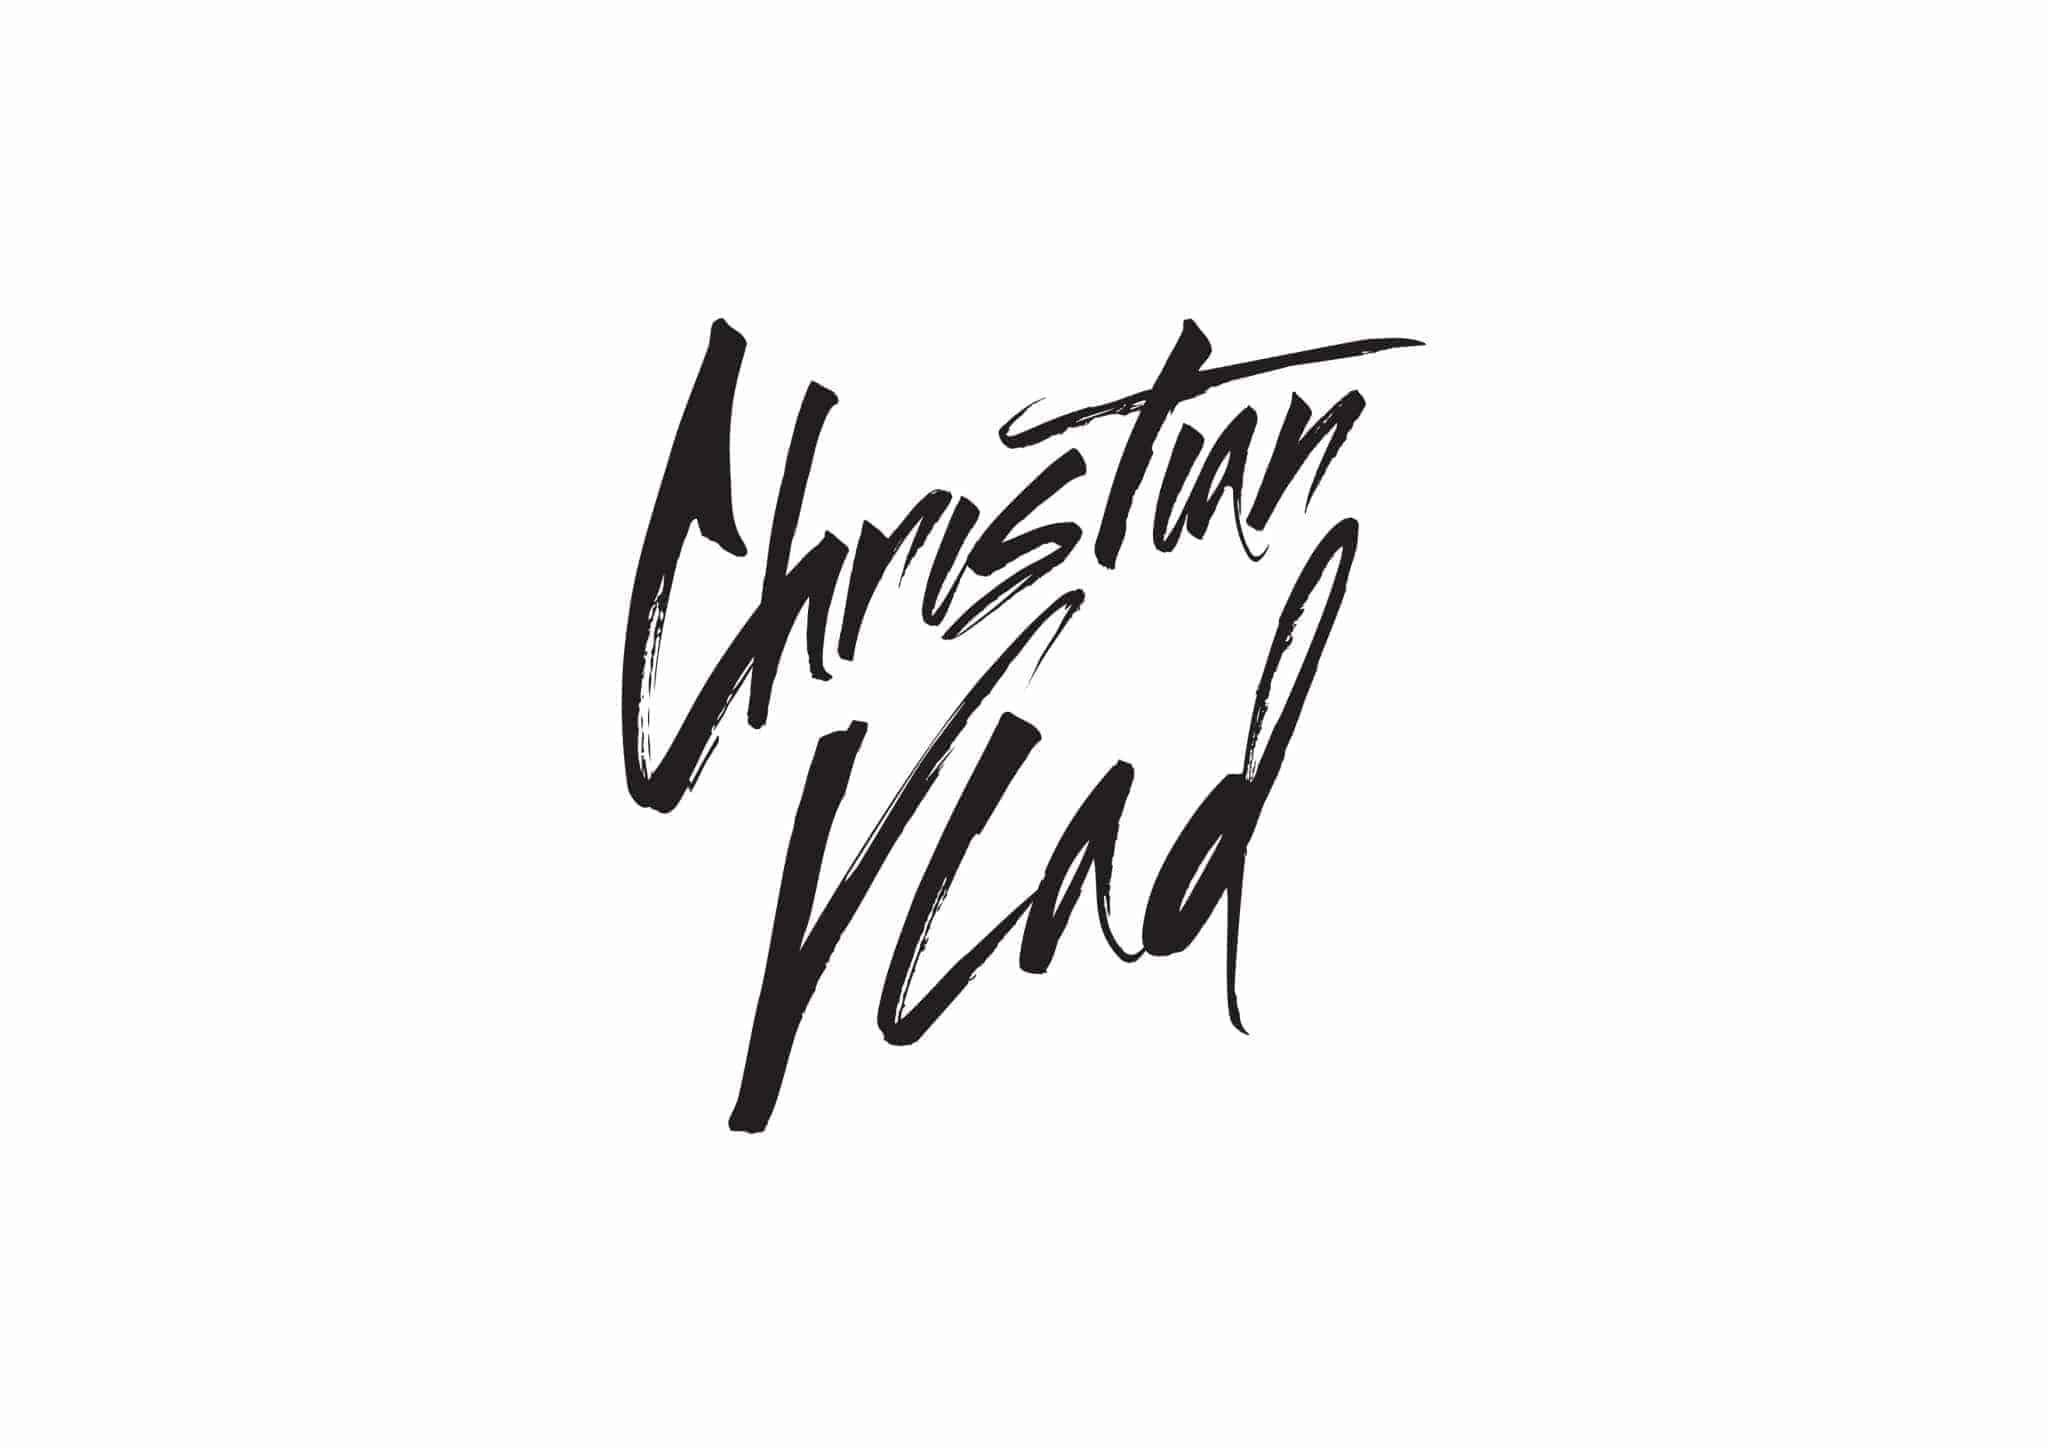 Christian Vlad